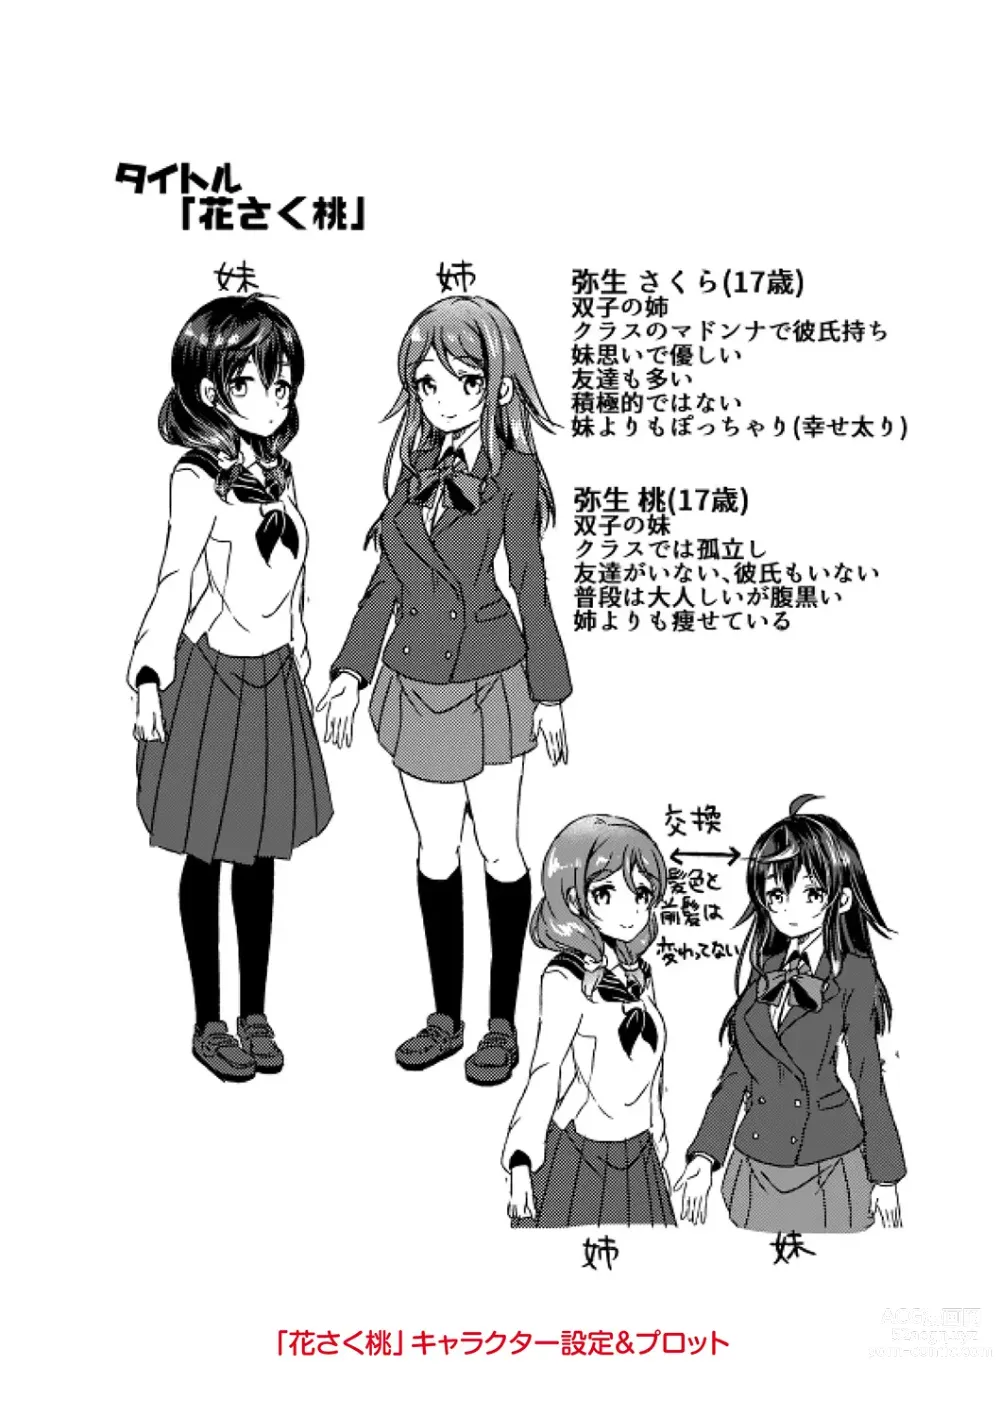 Page 210 of manga Kowashite Asobo + DLsite Gentei Chara Settei & Plot